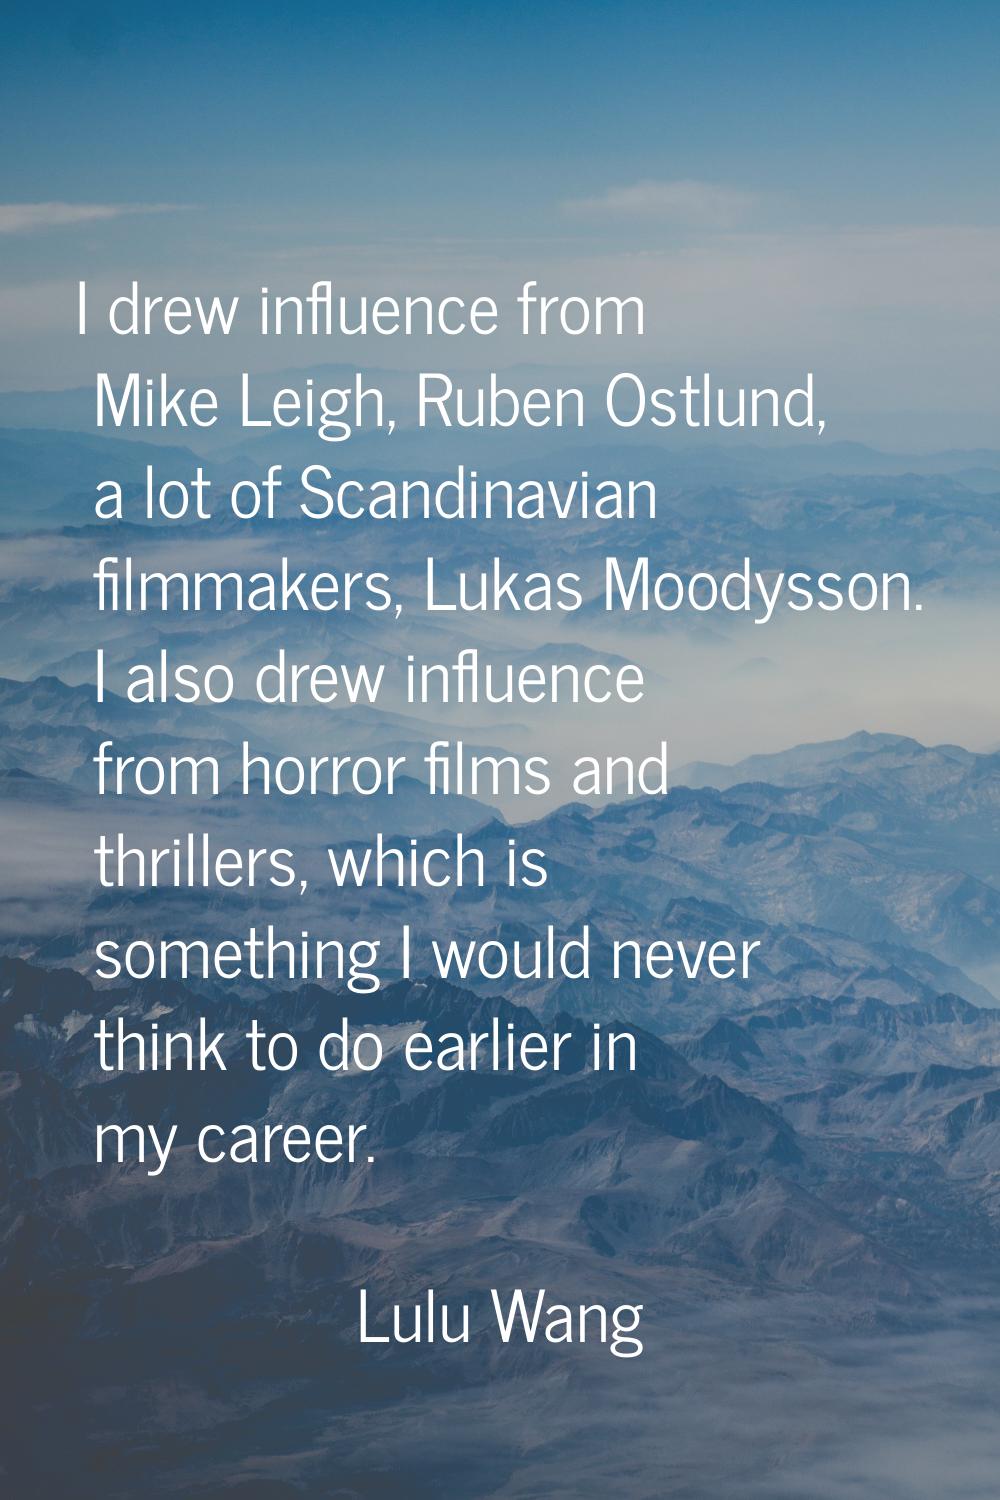 I drew influence from Mike Leigh, Ruben Ostlund, a lot of Scandinavian filmmakers, Lukas Moodysson.